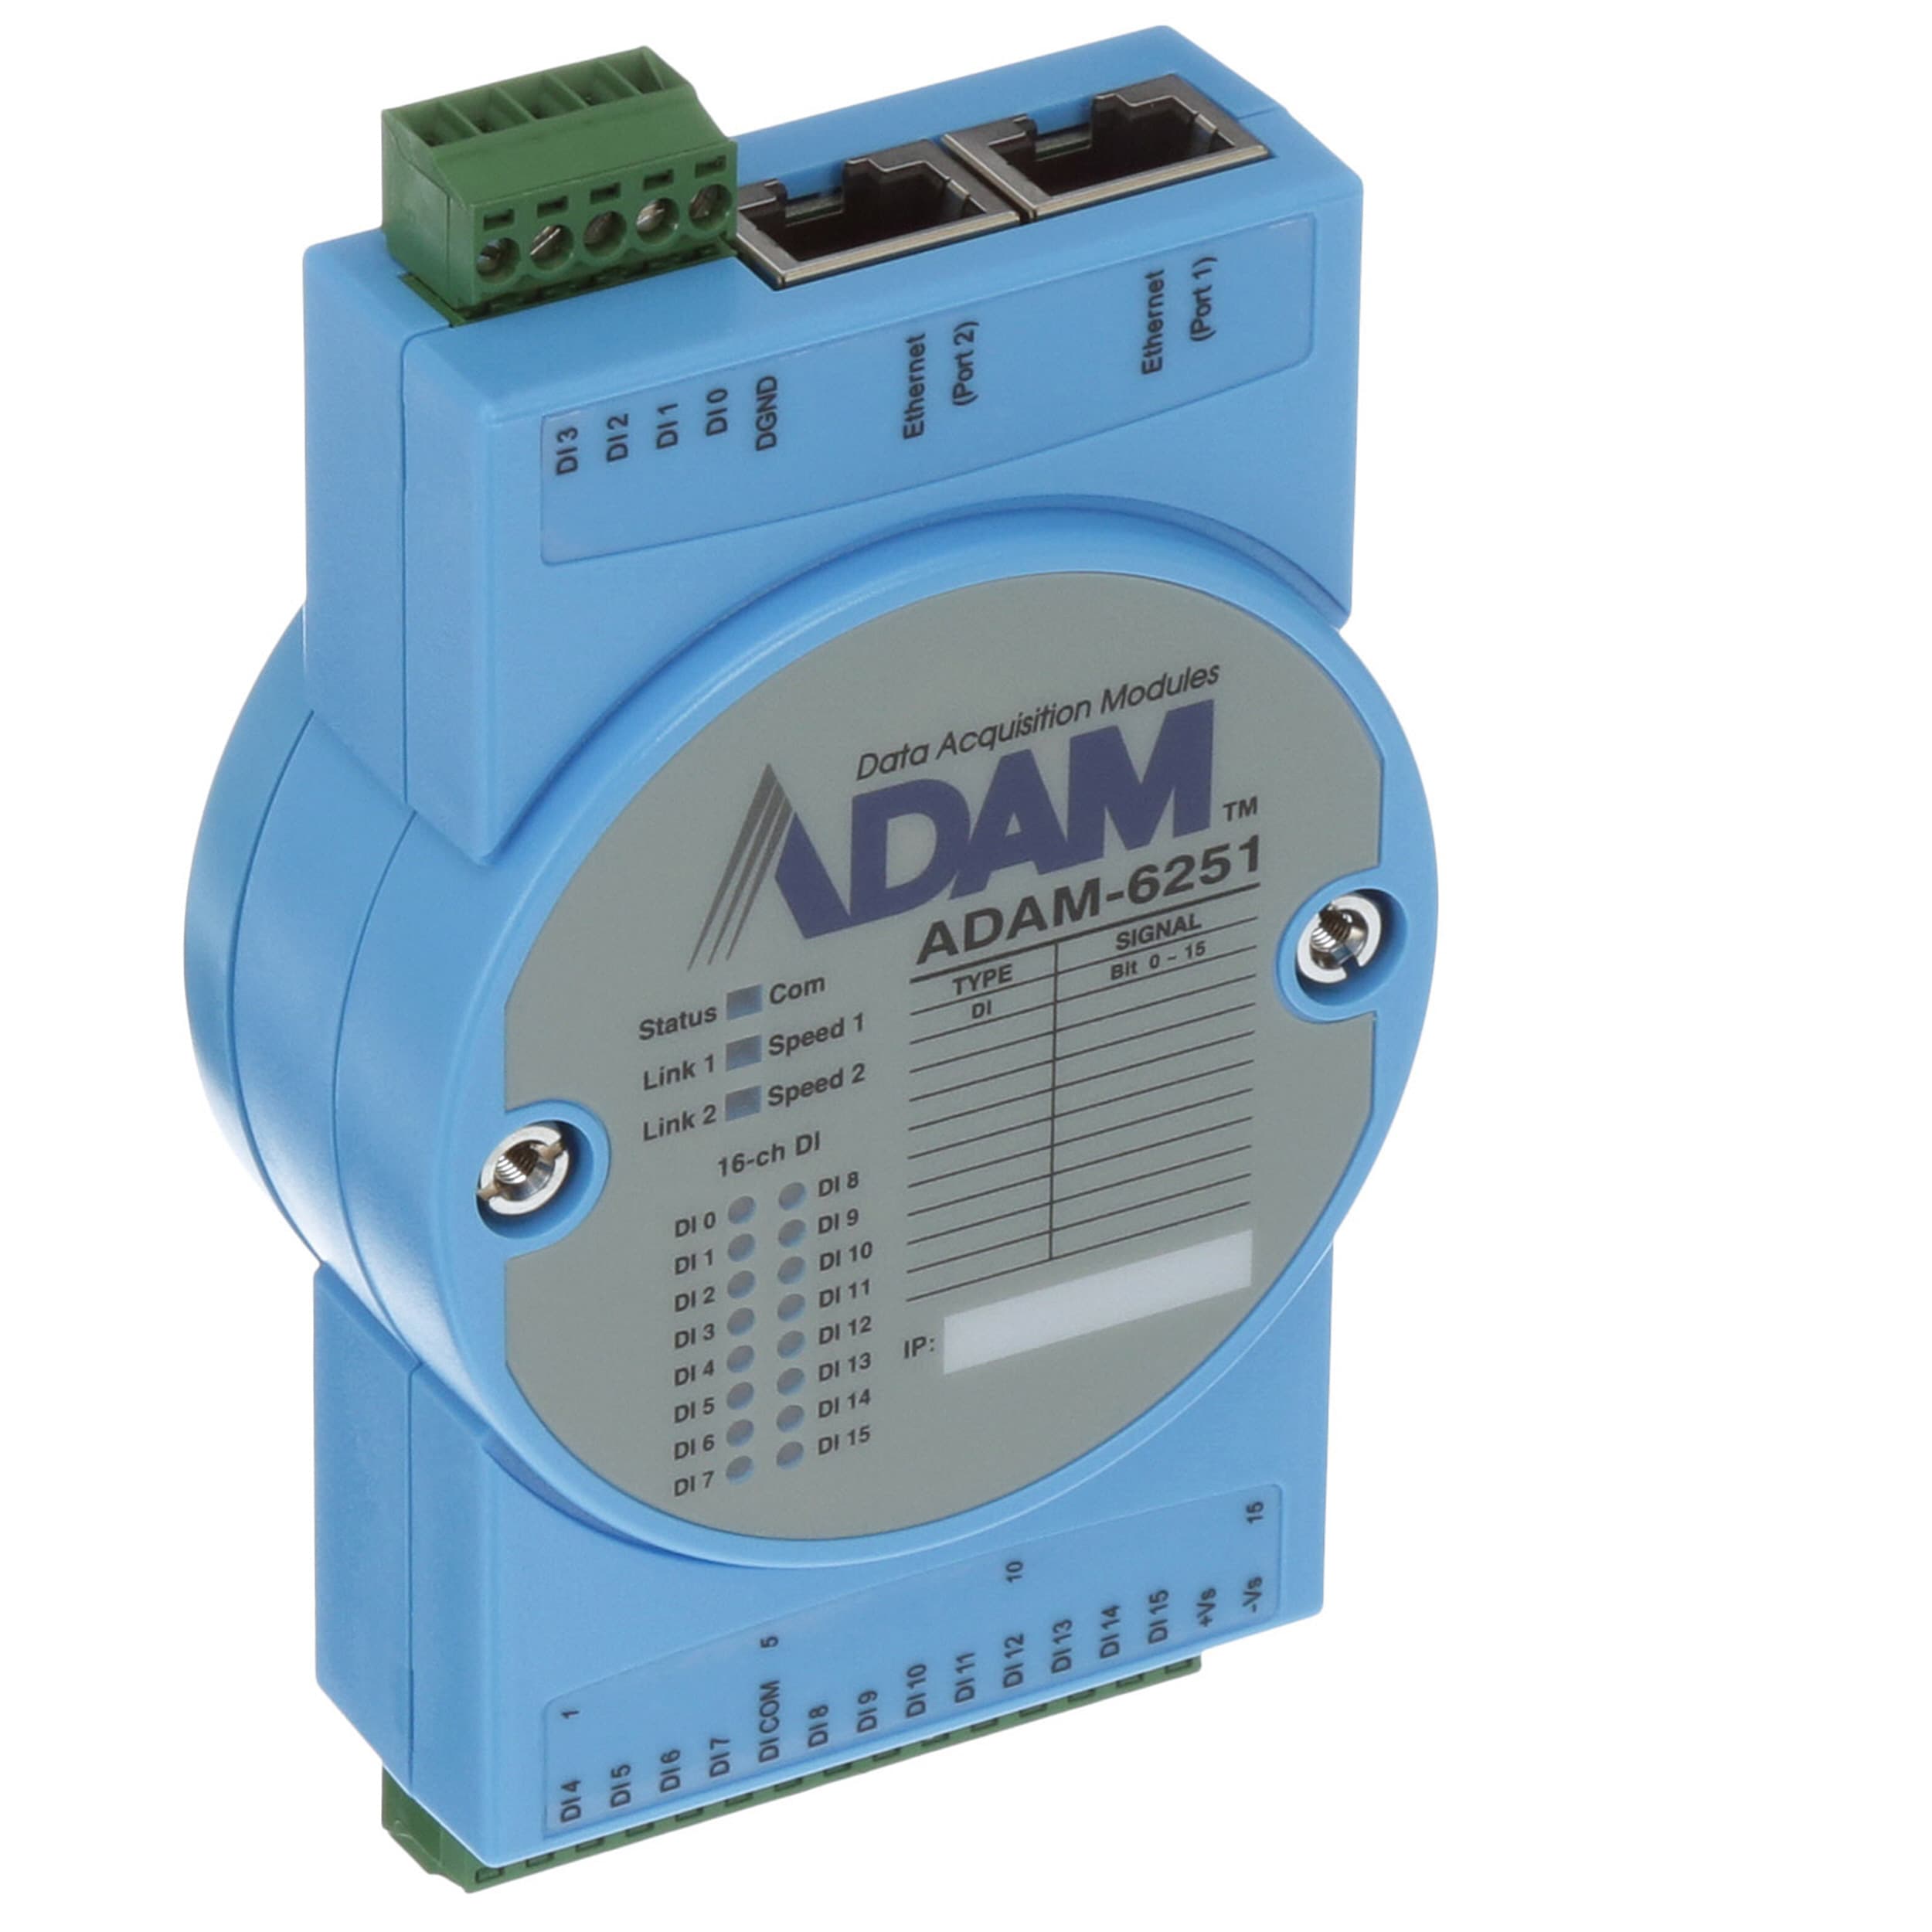 Advantech Adam 6251 Ae 16 Channel Isolated Digital Input Modbus Tcp Allied Electronics Automation